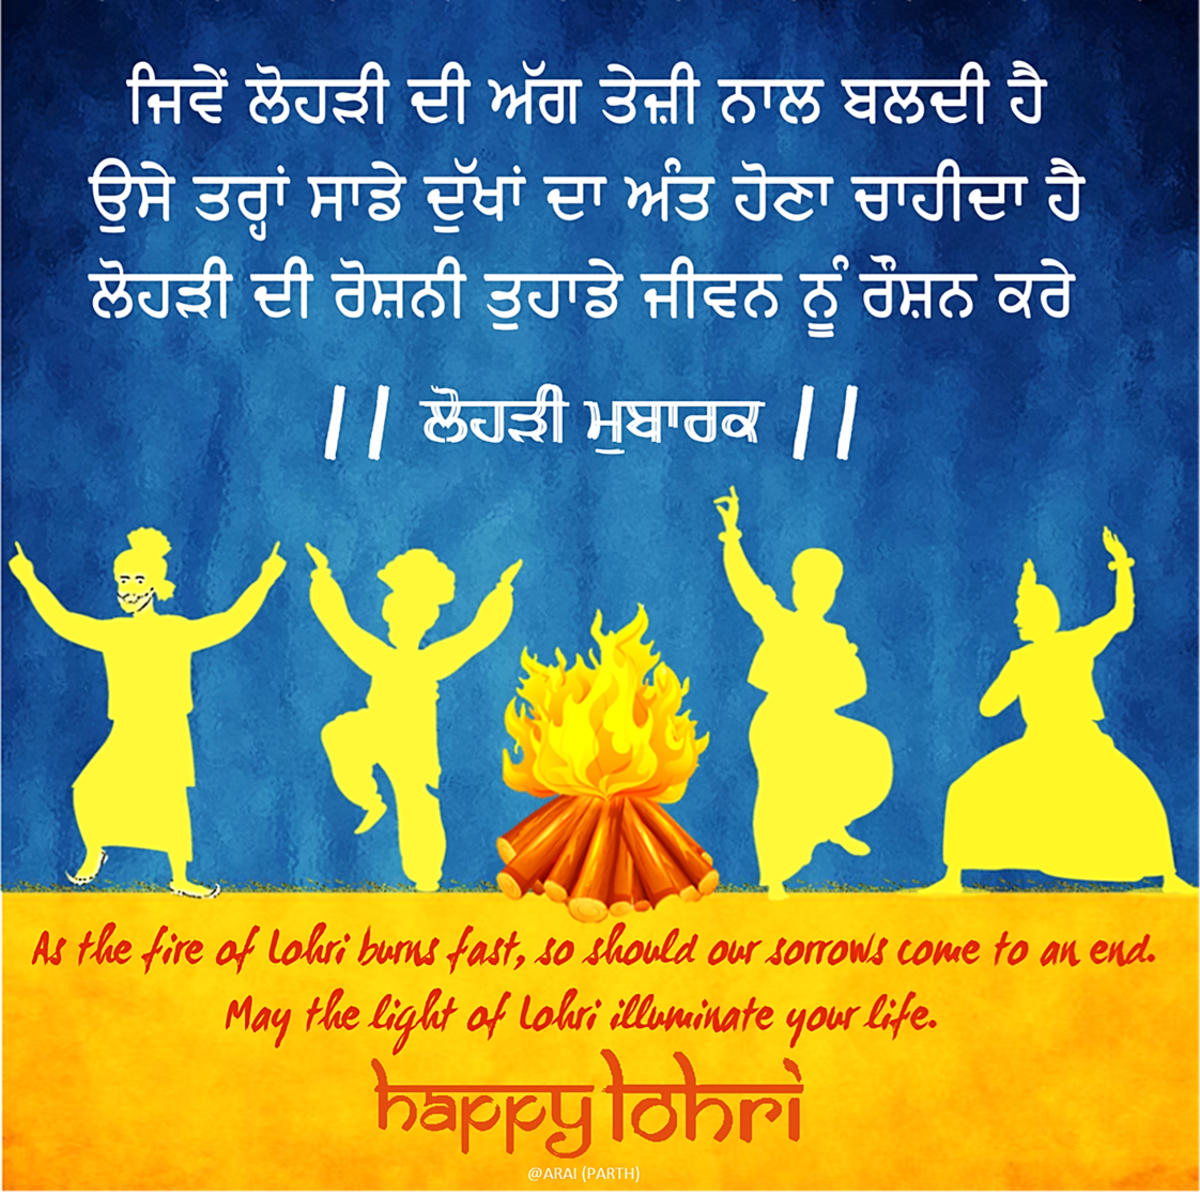 happy-lohri-wishes-and-greetings-in-punjabi-language